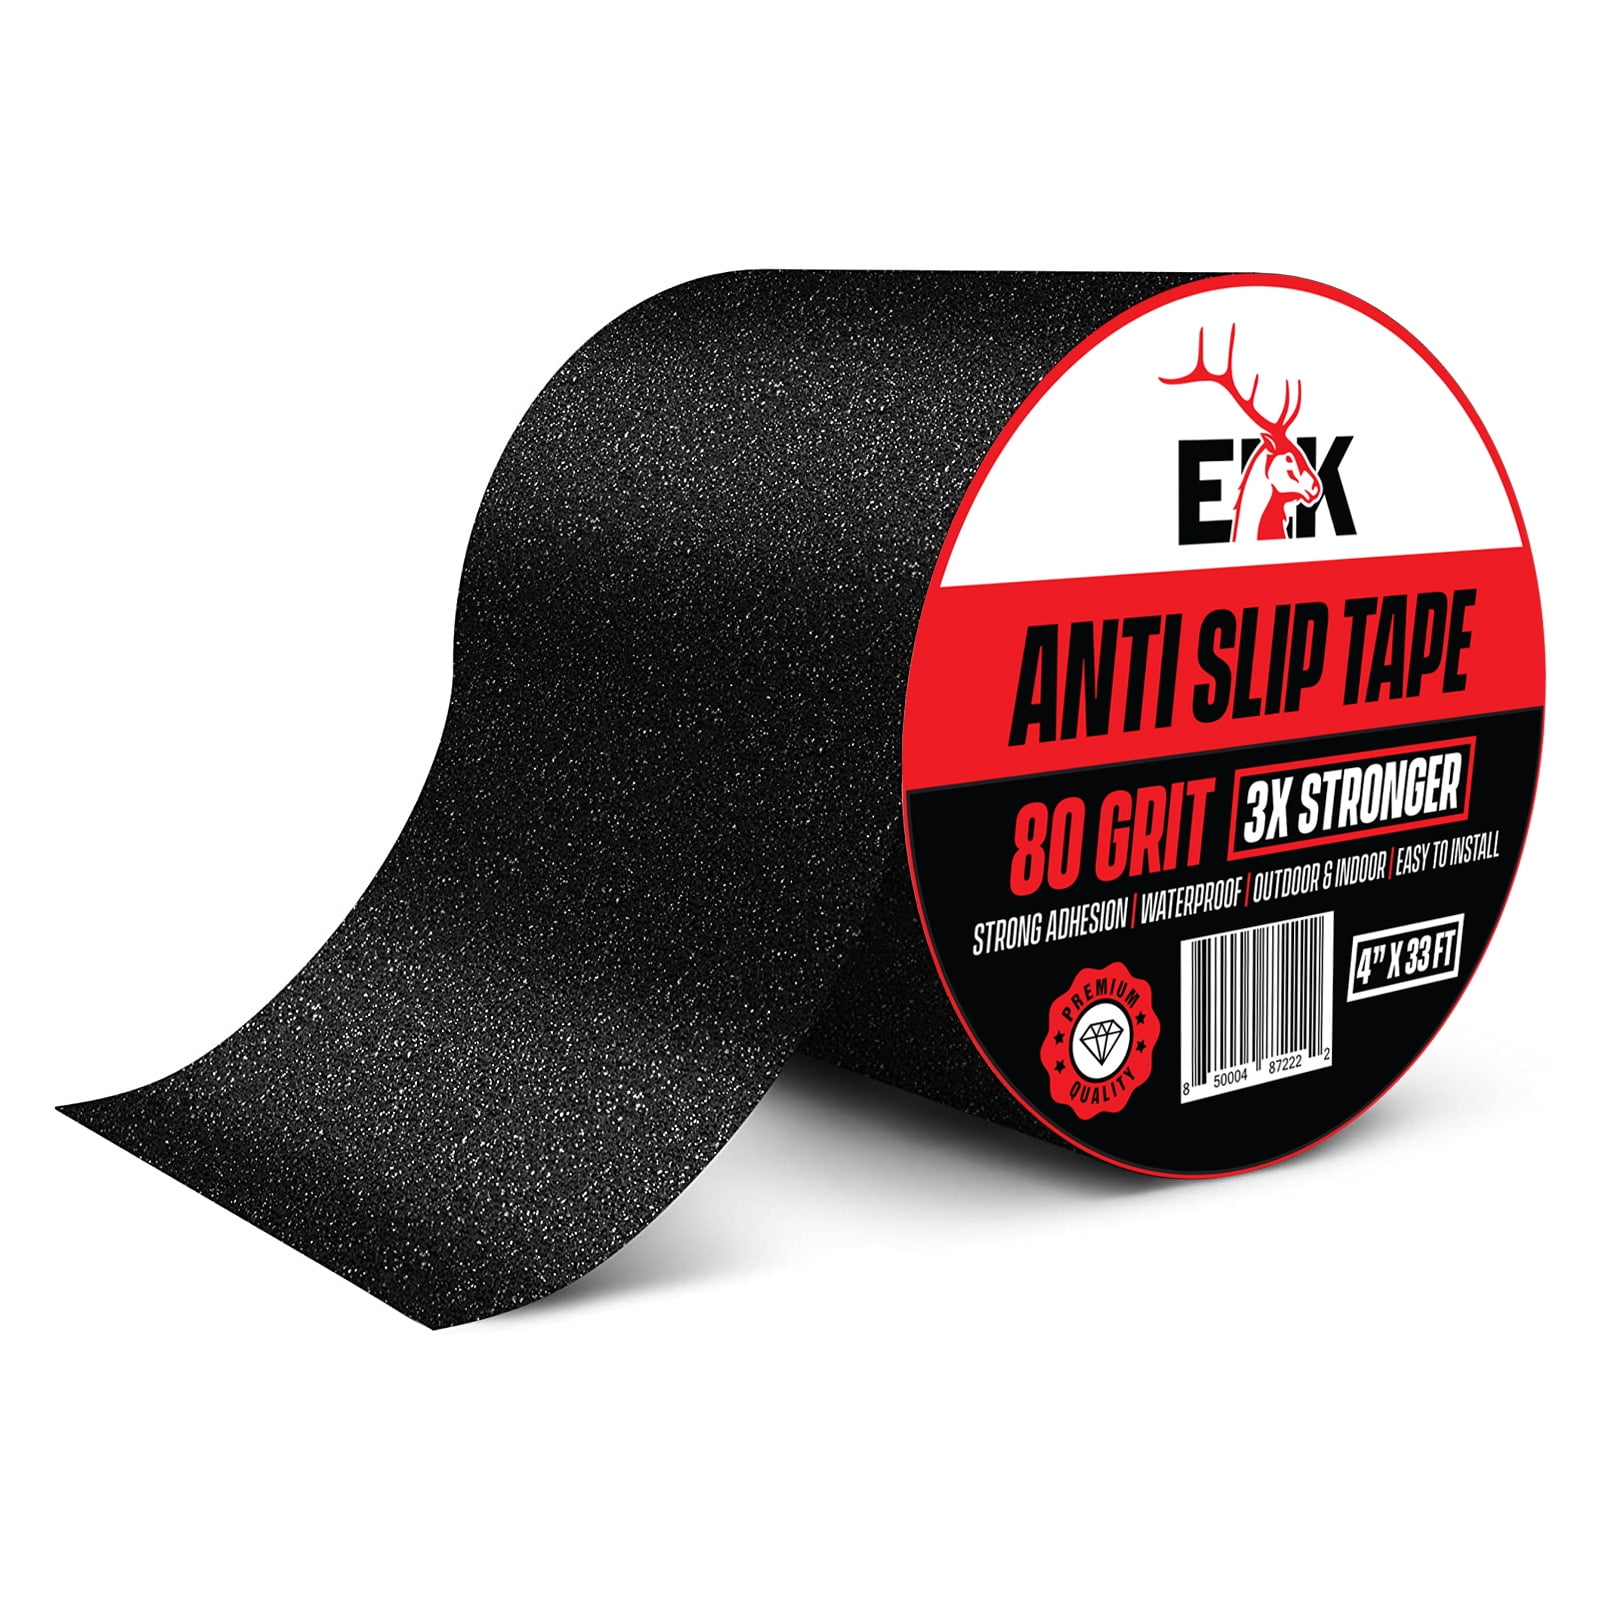 BEST 2"x30 FT Black & Yellow Anti-Slip Safety Grip Tape,80Grit Industrial Grade 